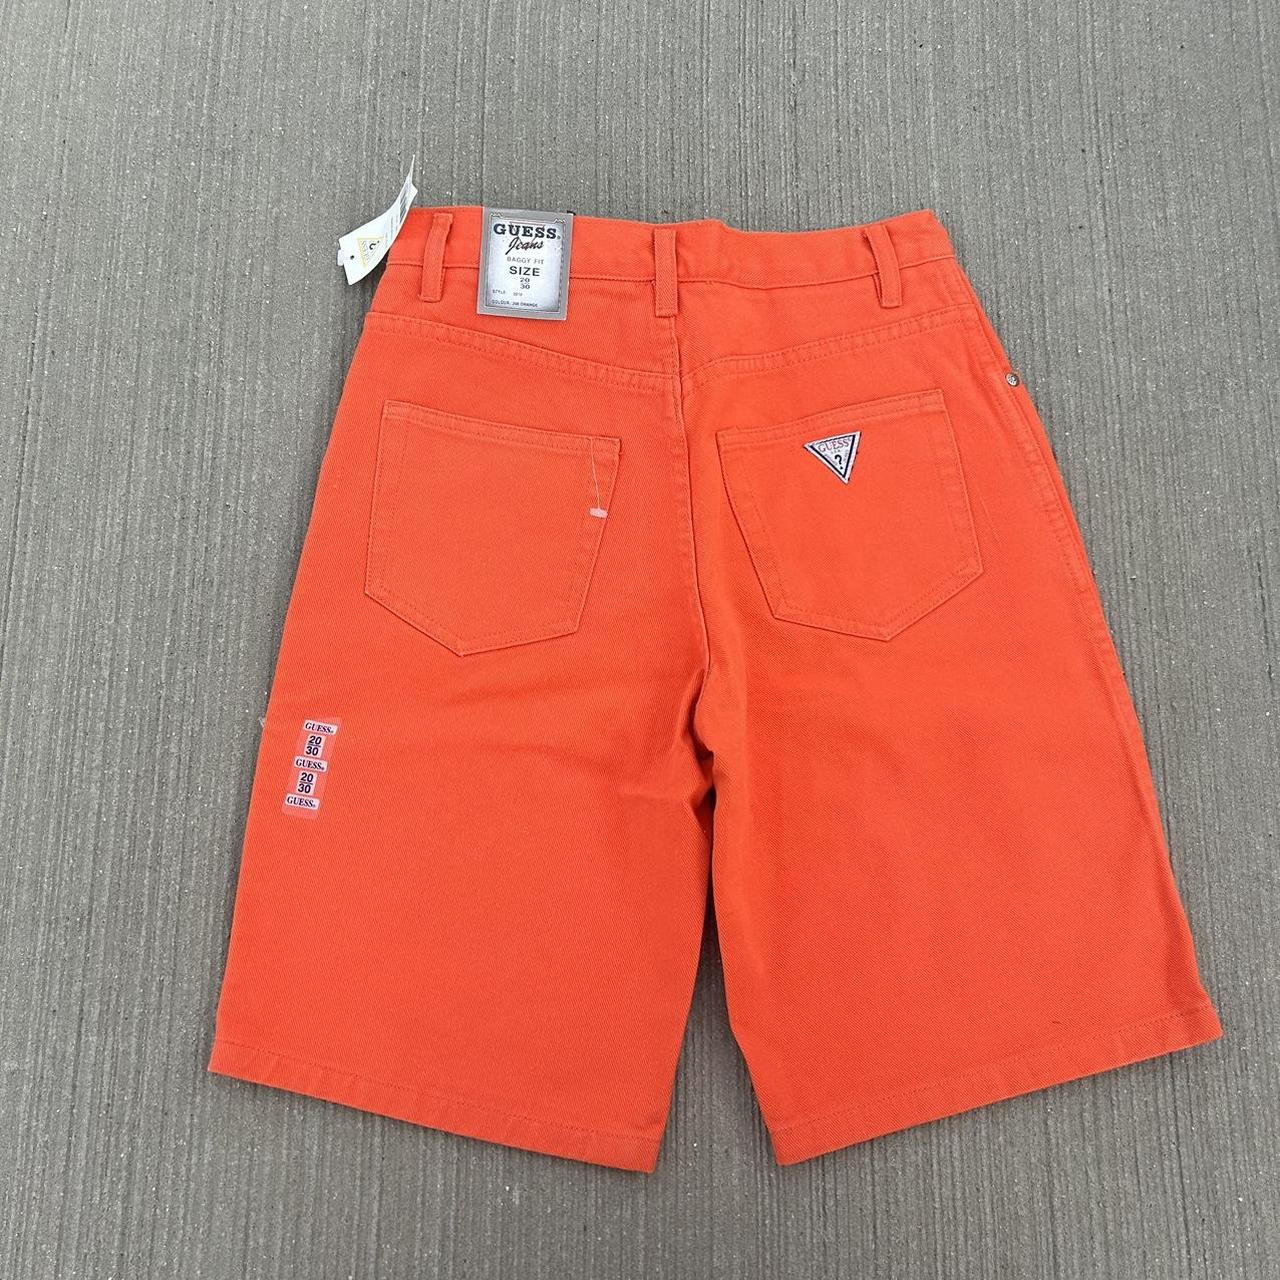 Guess Men's Orange Shorts | Depop